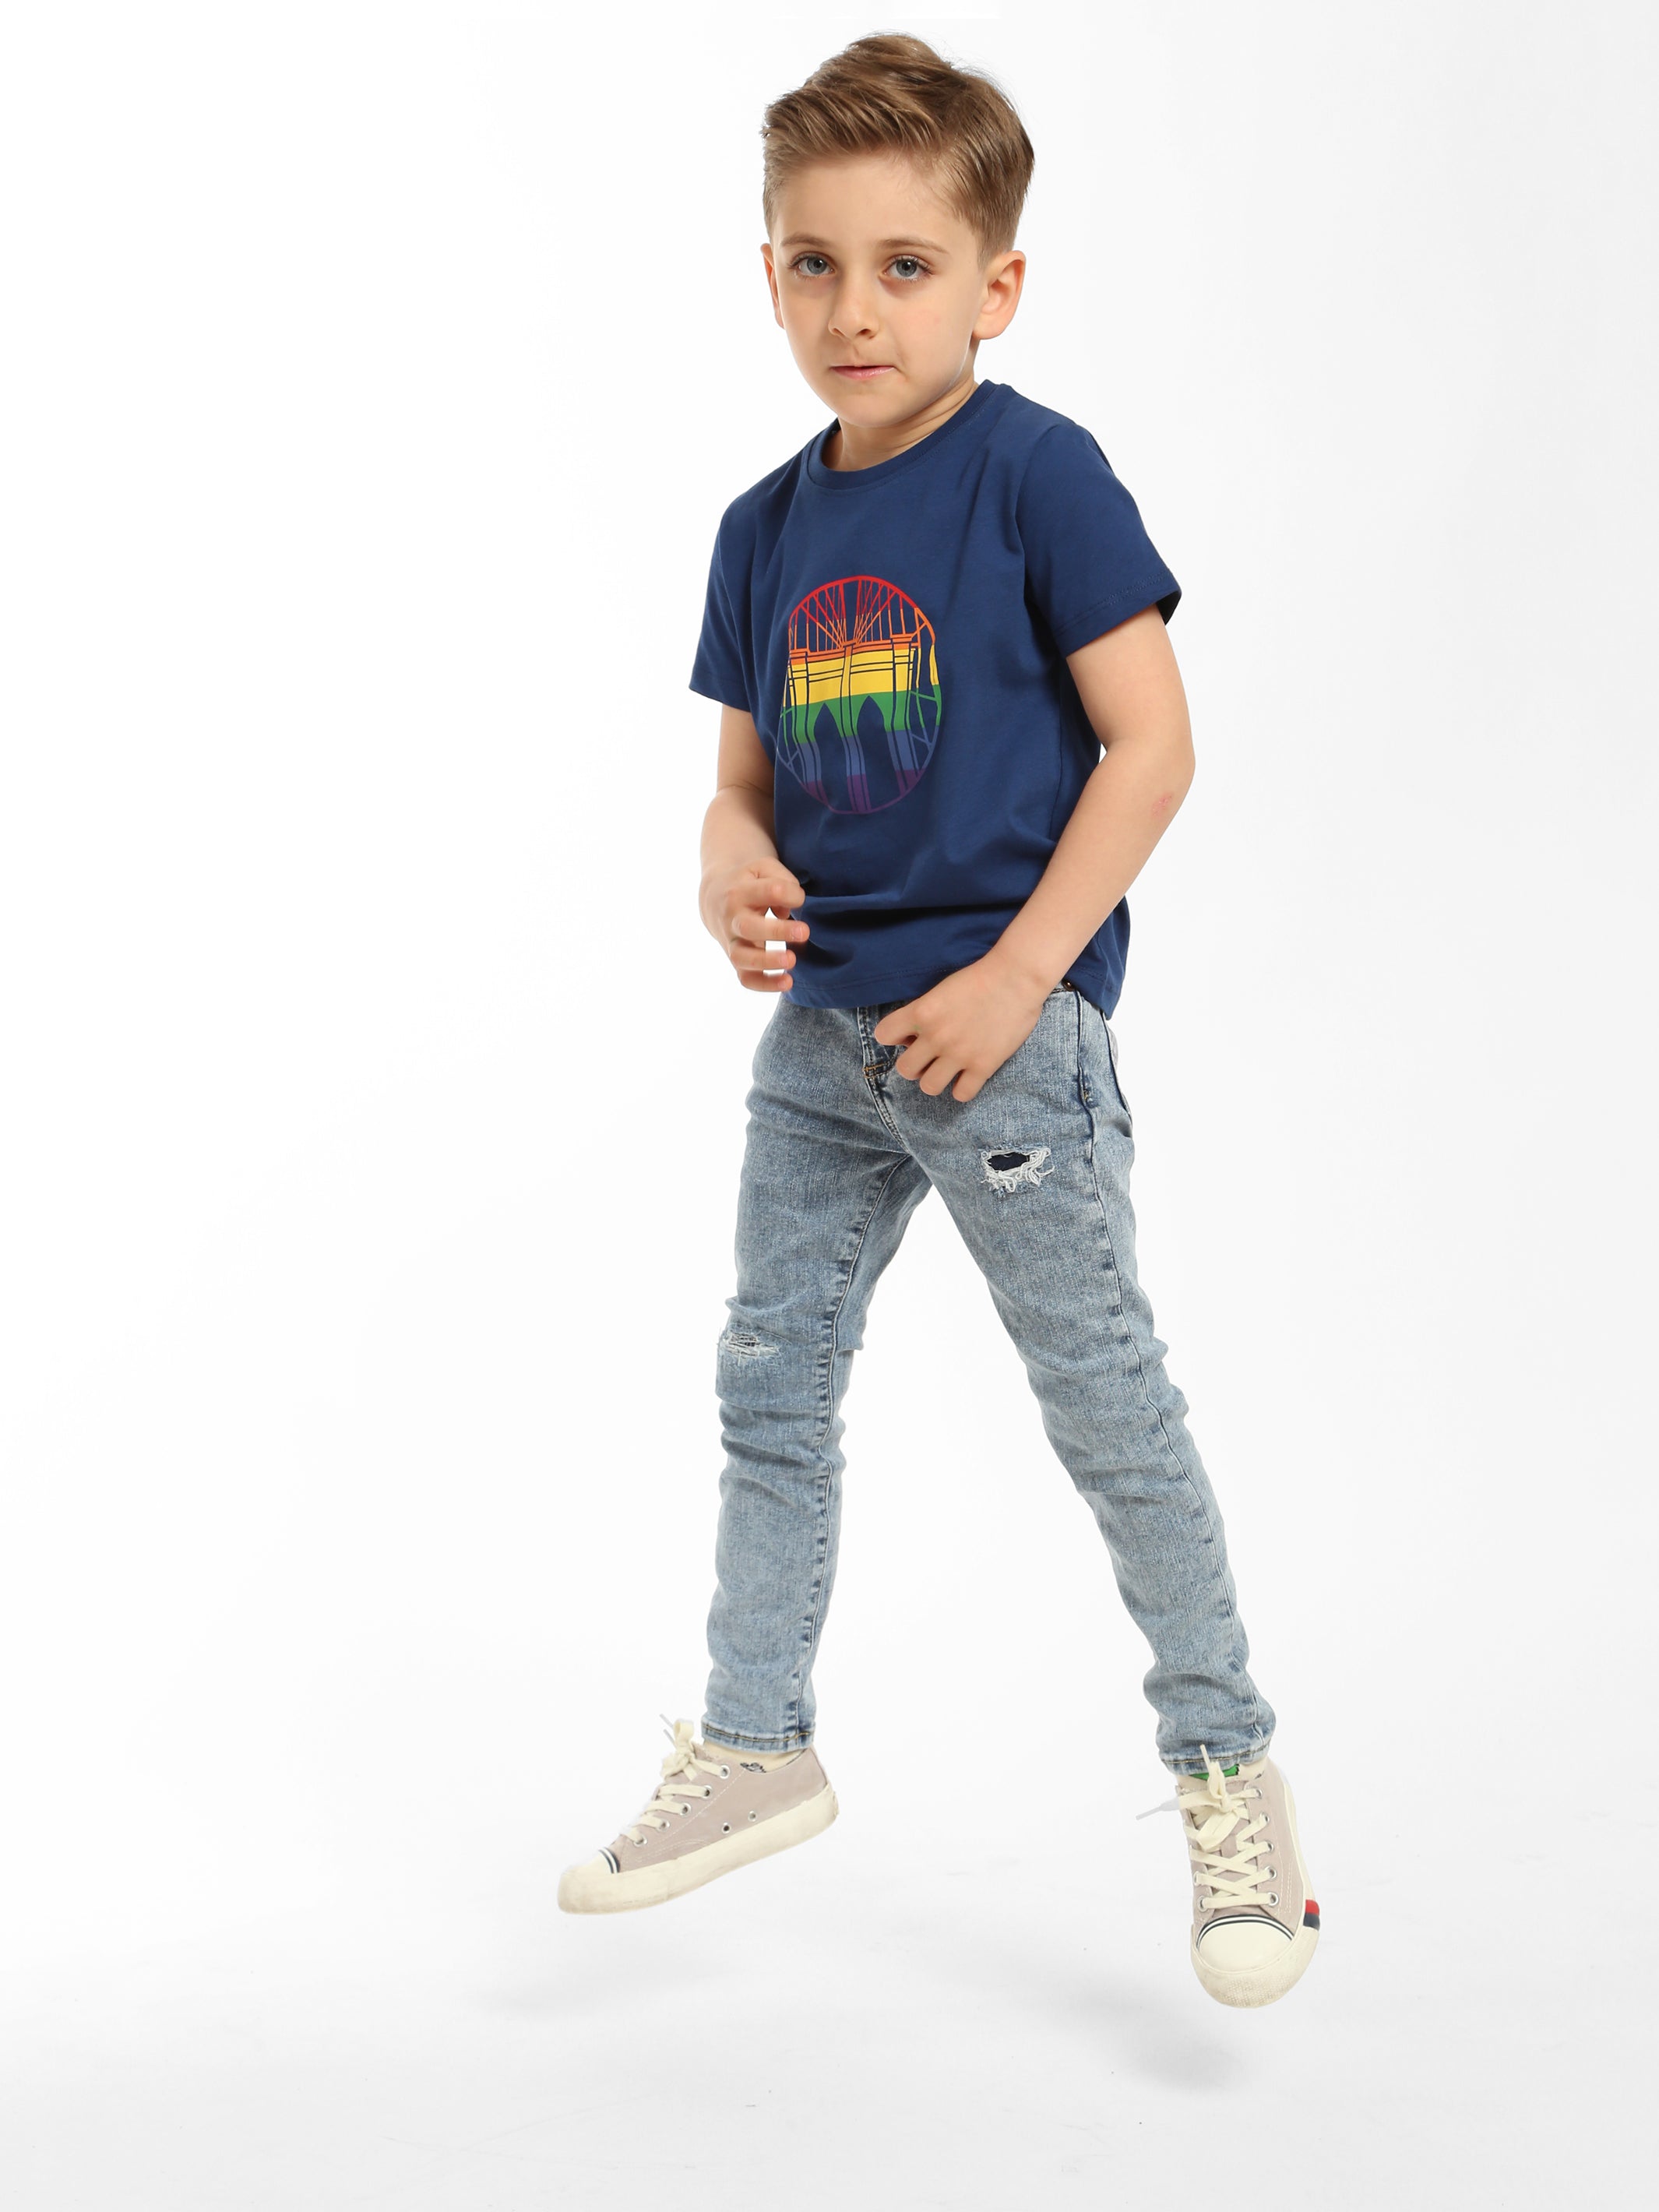 Kid's Brooklyn Bridge Pride T-shirt in Mood Indigo - BROOKLYN INDUSTRIES